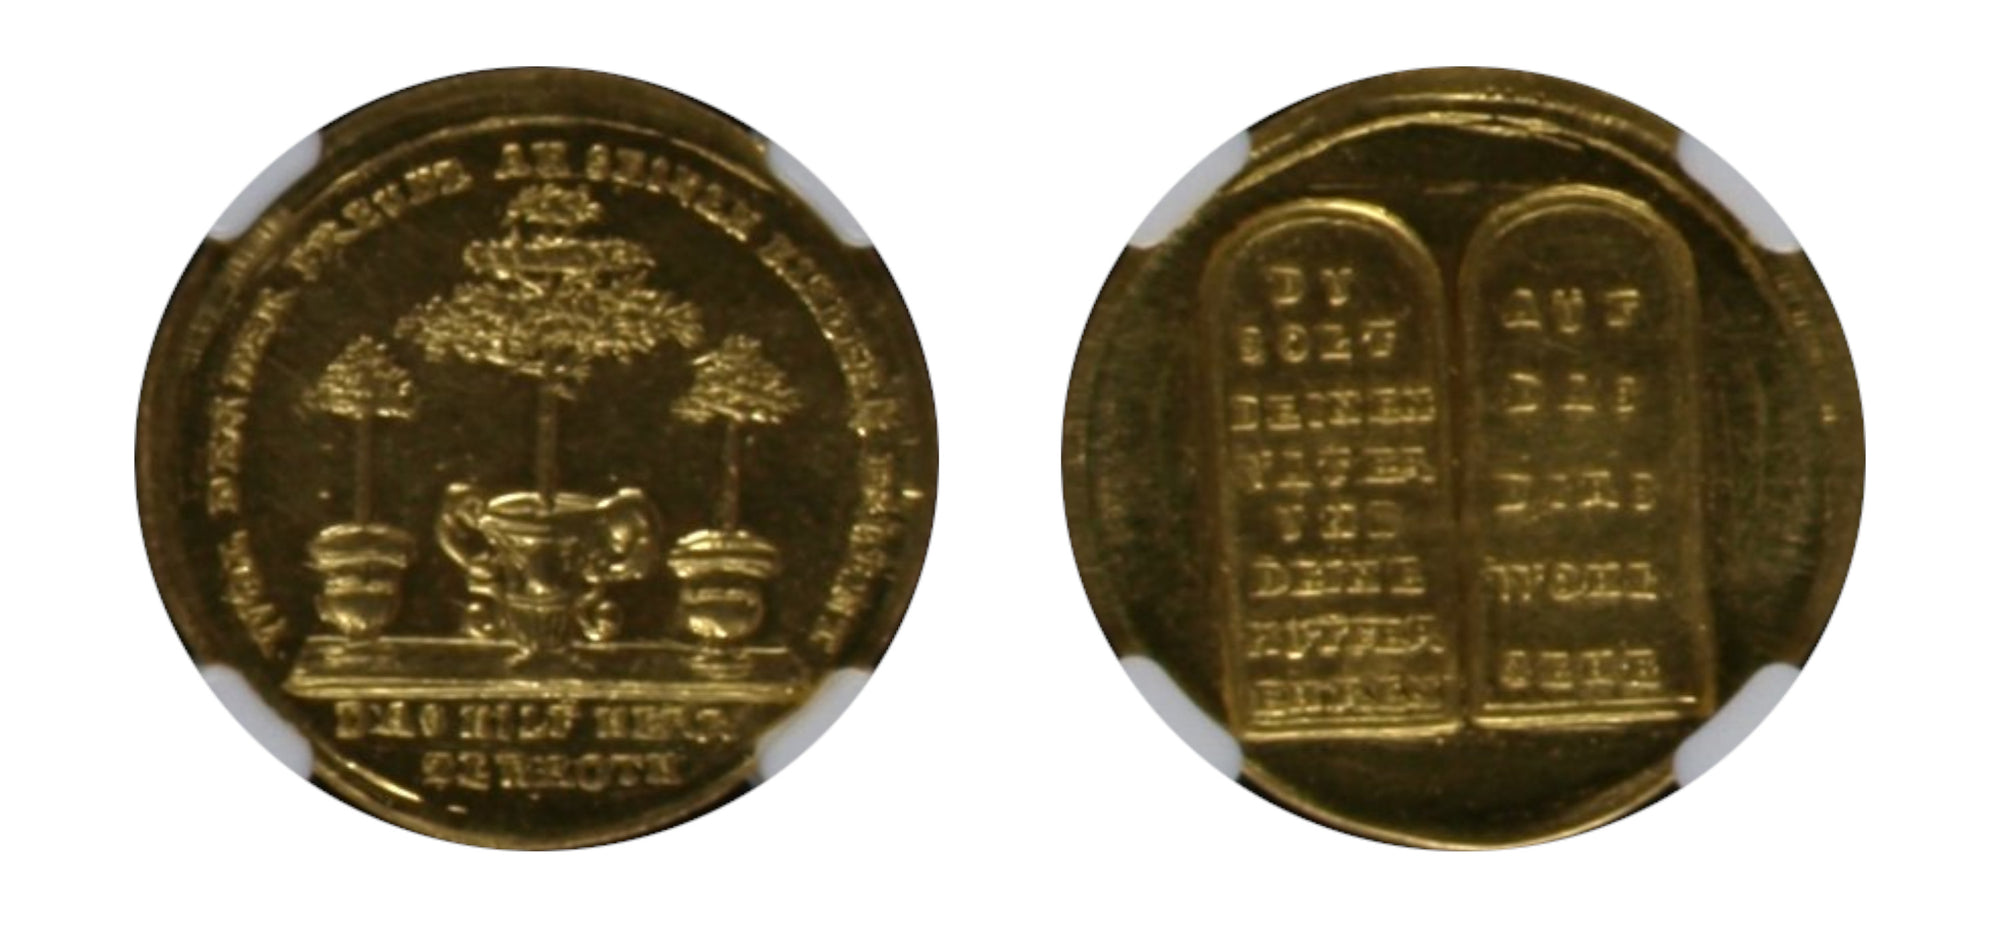 (Undated) Hamburg Gold Medal Goppel-1142 NGC AU58 - Hard Asset Management, Inc